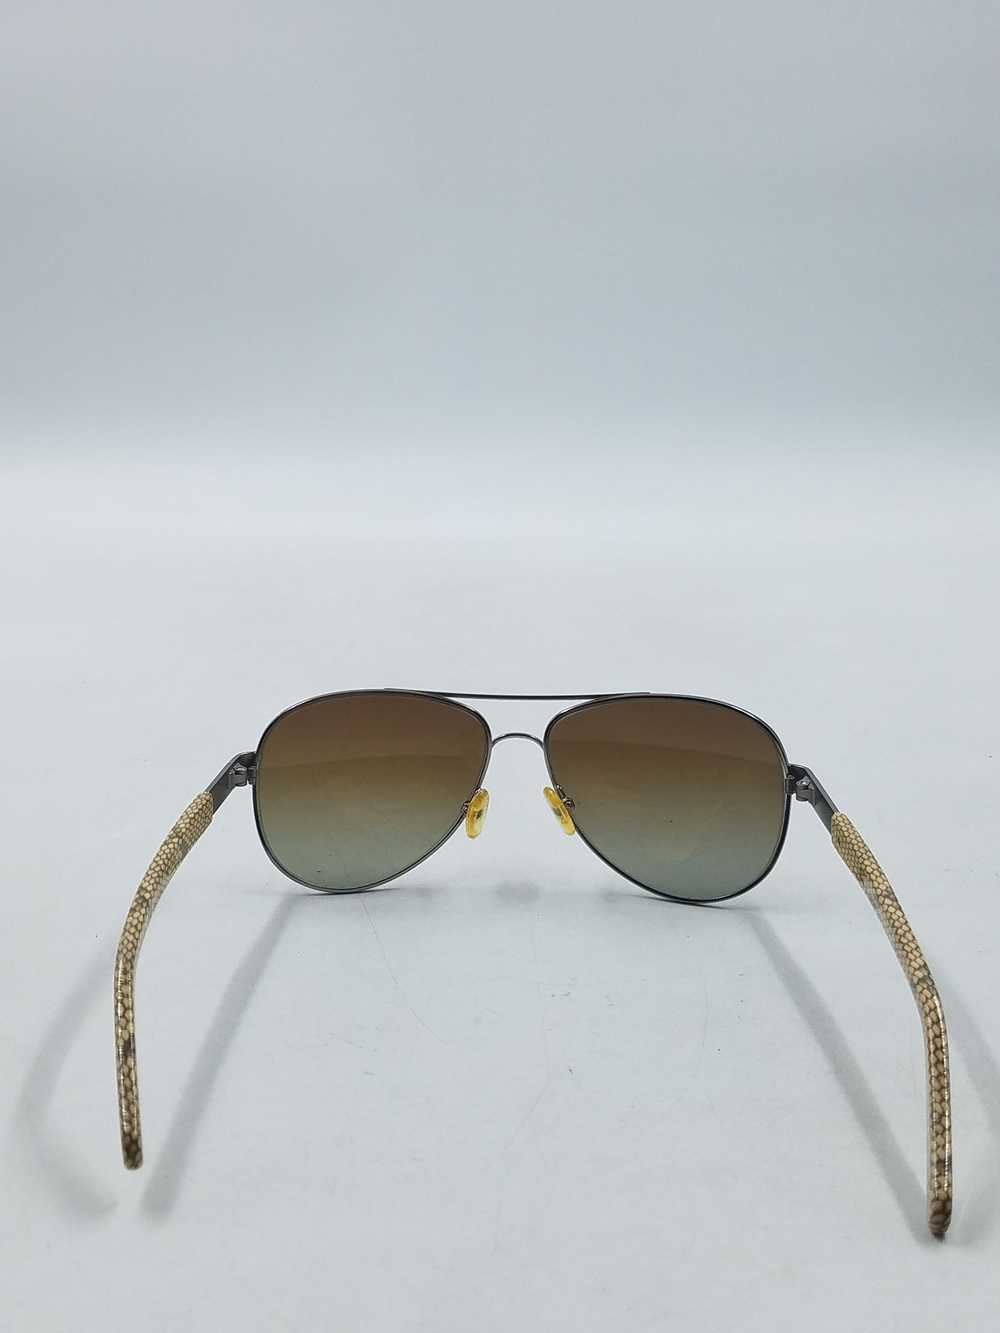 Tory Burch Silver Tinted Aviator Sunglasses - image 3